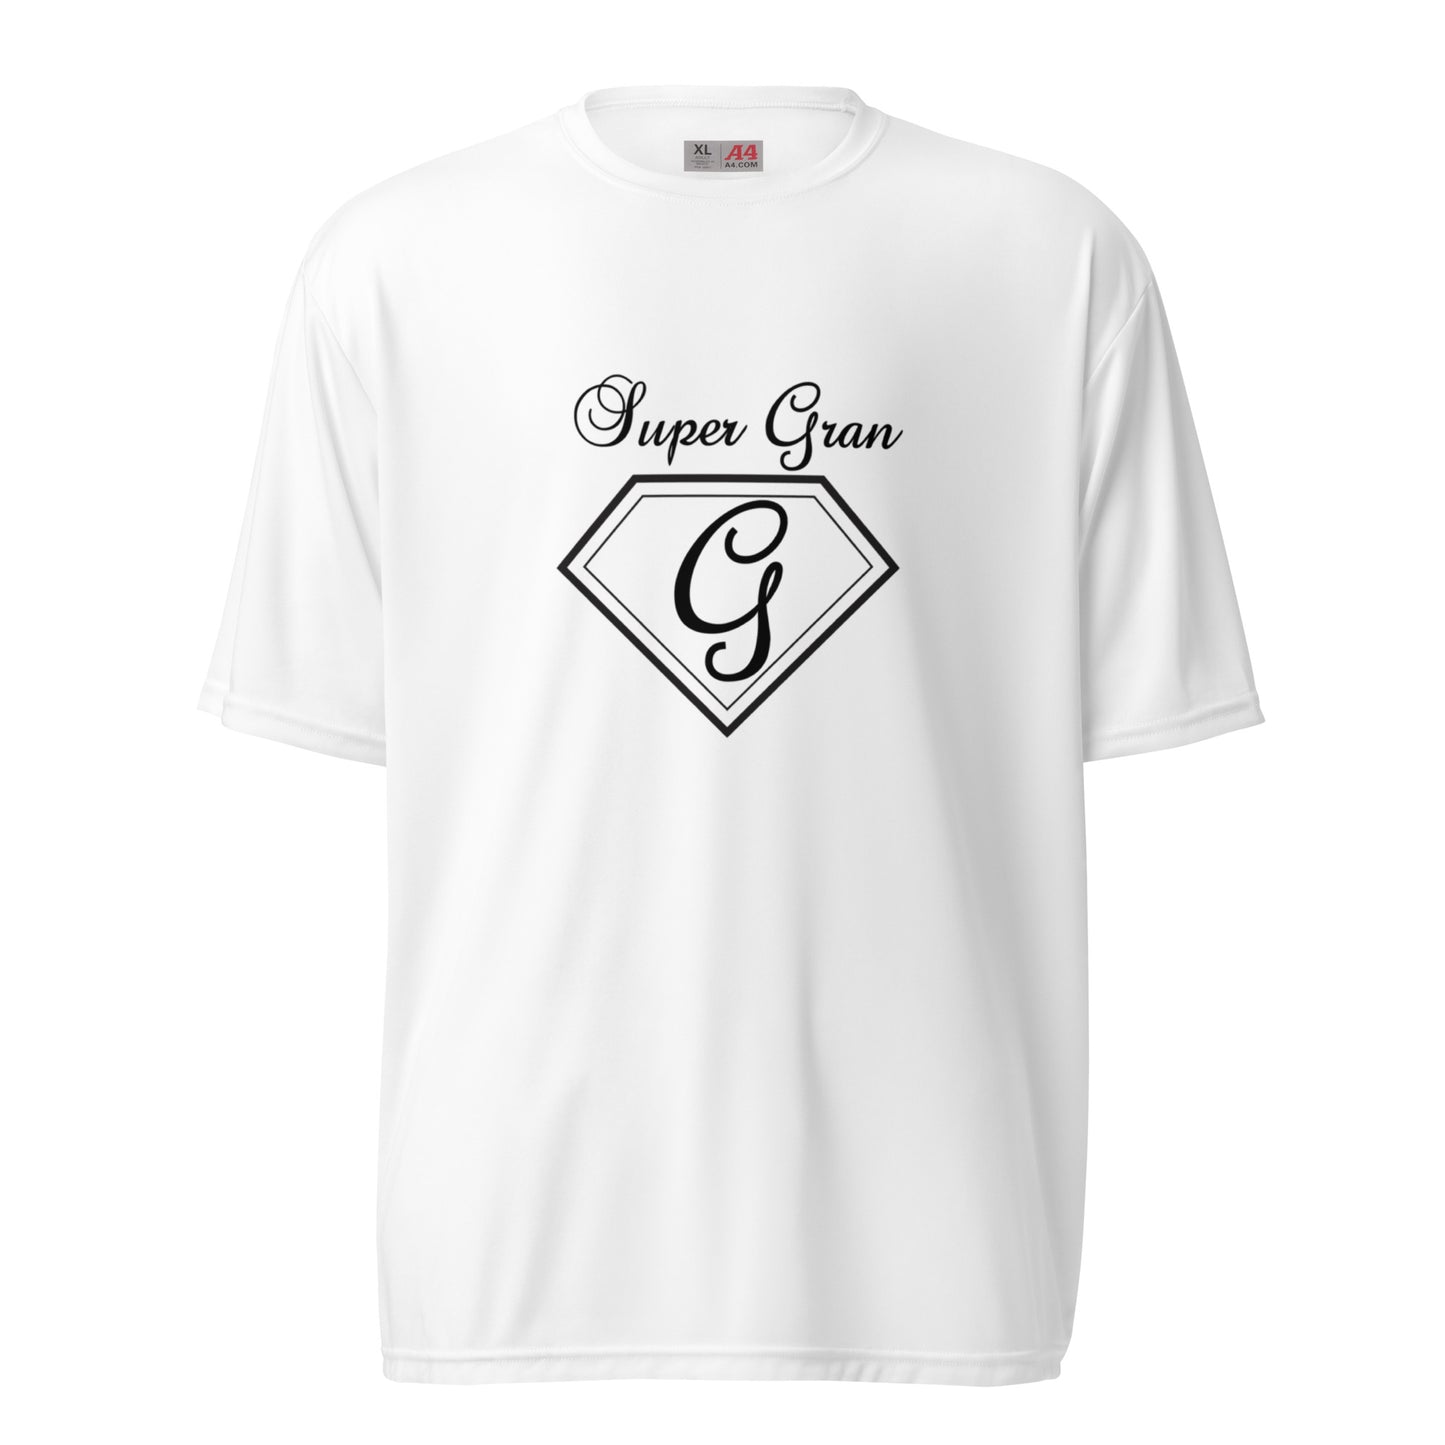 Super Gran unisex performance crew neck t-shirt - Black Print